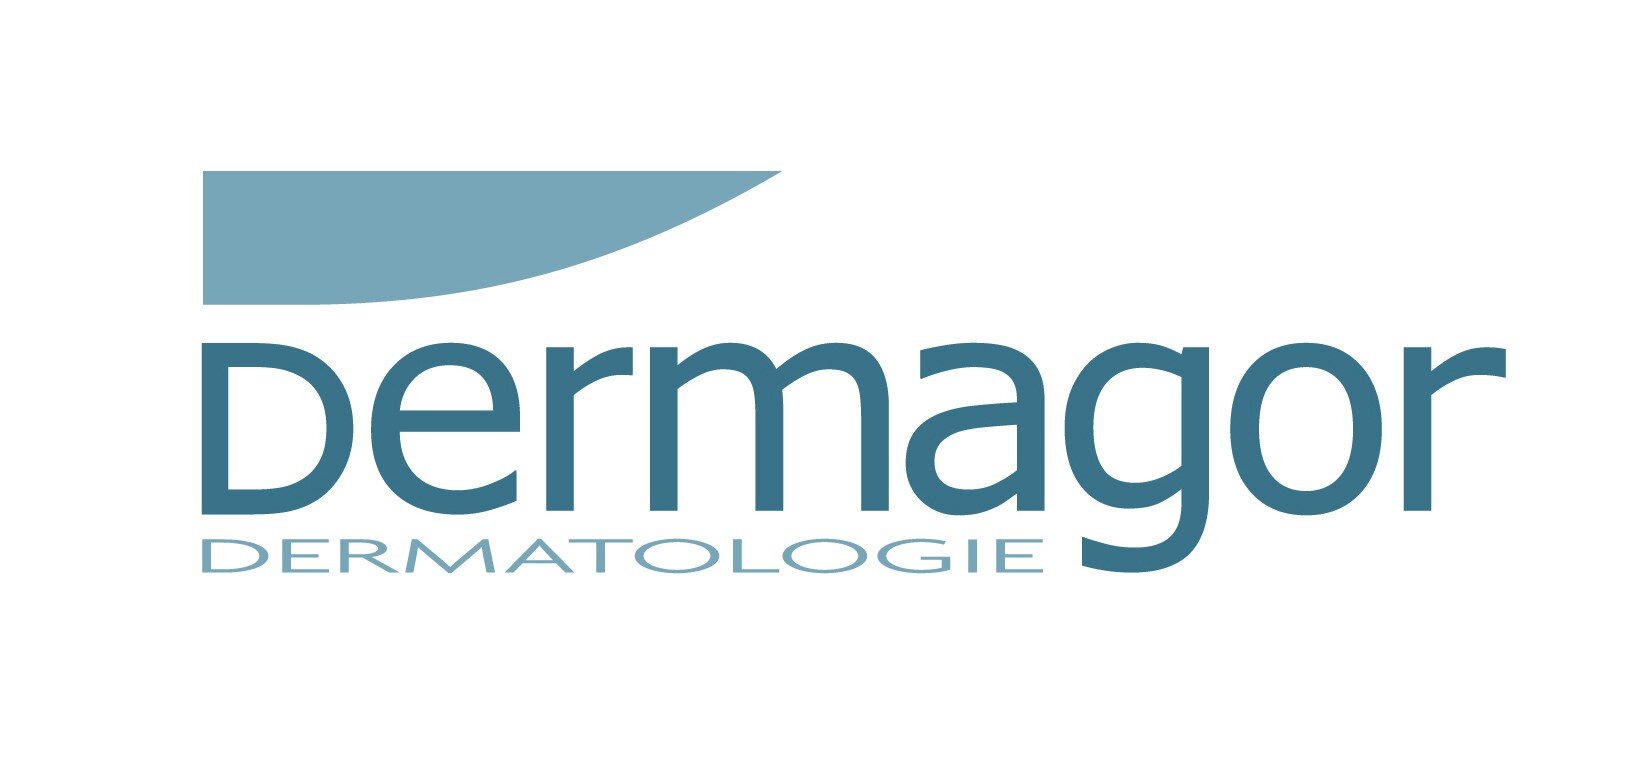 dermagor_logo_signature.jpg